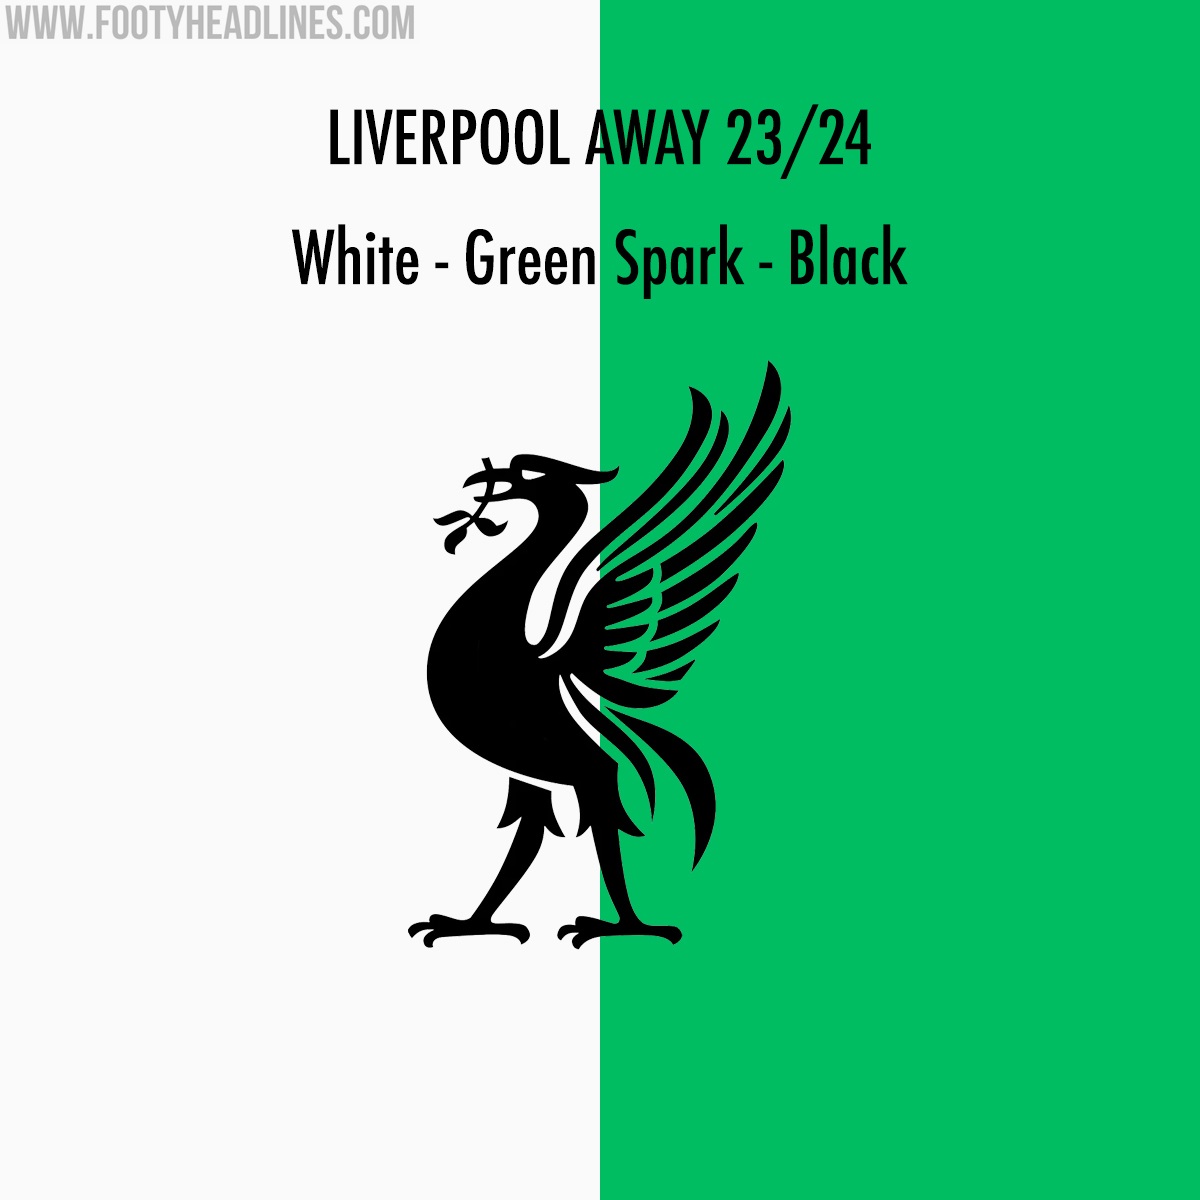 Reported Liverpool away kit 23/24 - DaveOCKOP